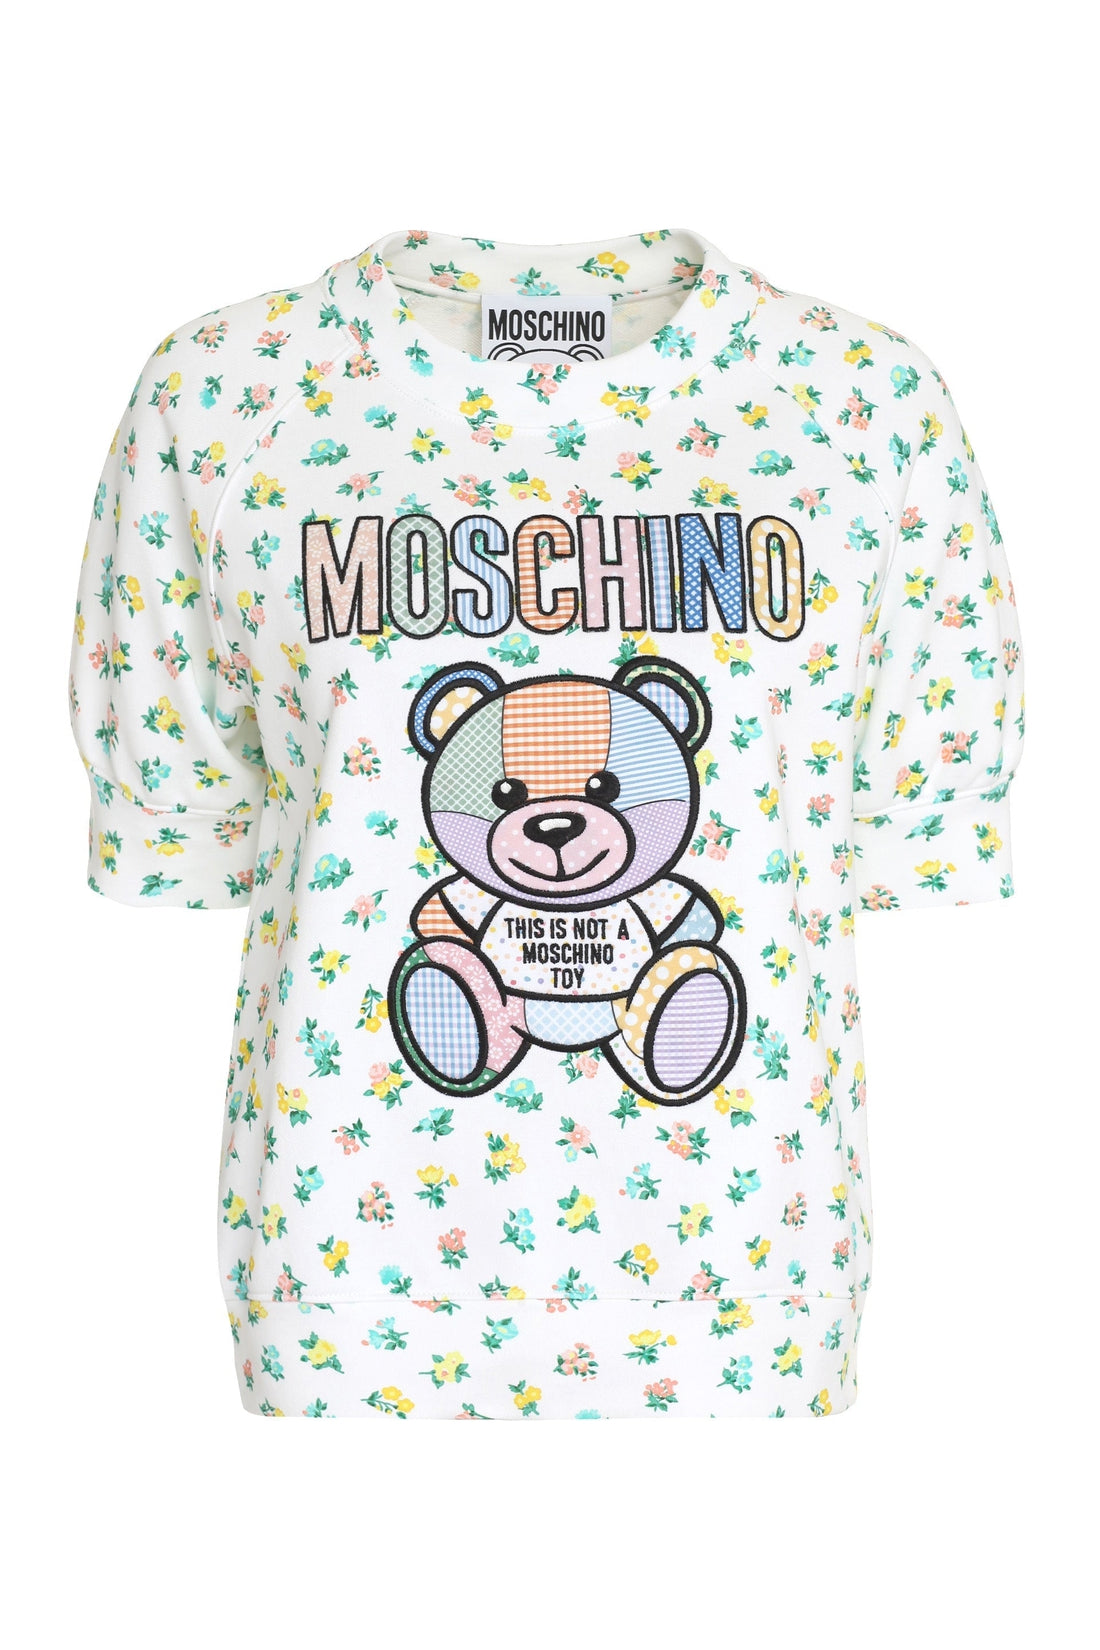 Moschino-OUTLET-SALE-Printed cotton sweatshirt-ARCHIVIST